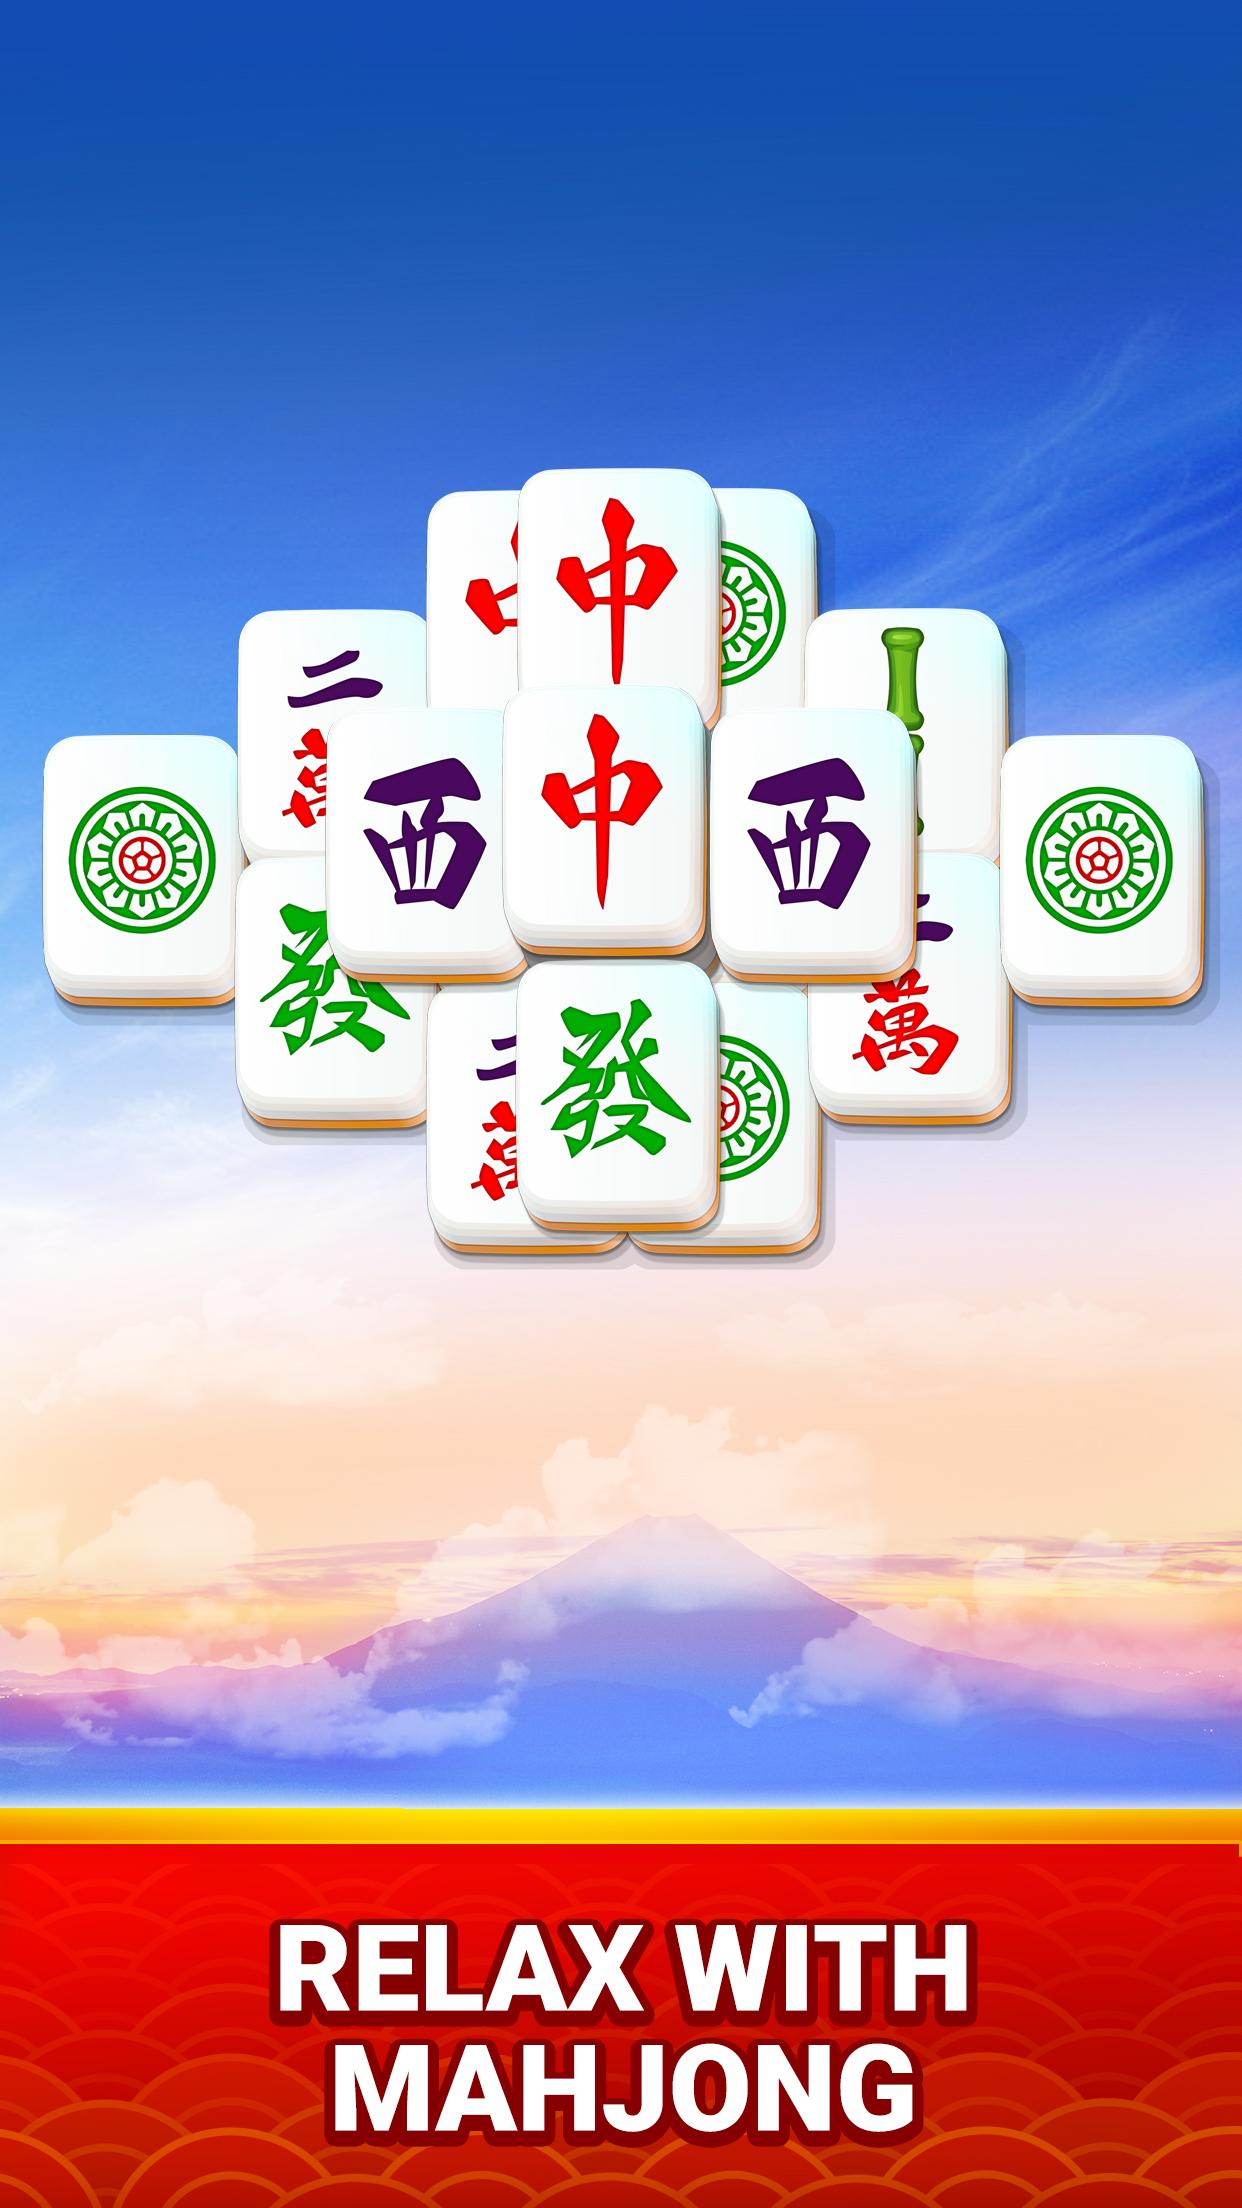 Mahjong club. Дзен Маджонг. Маджонг клуб головоломка. Zen Mahjong настольная игра. Mahjong Solitaire обложка.